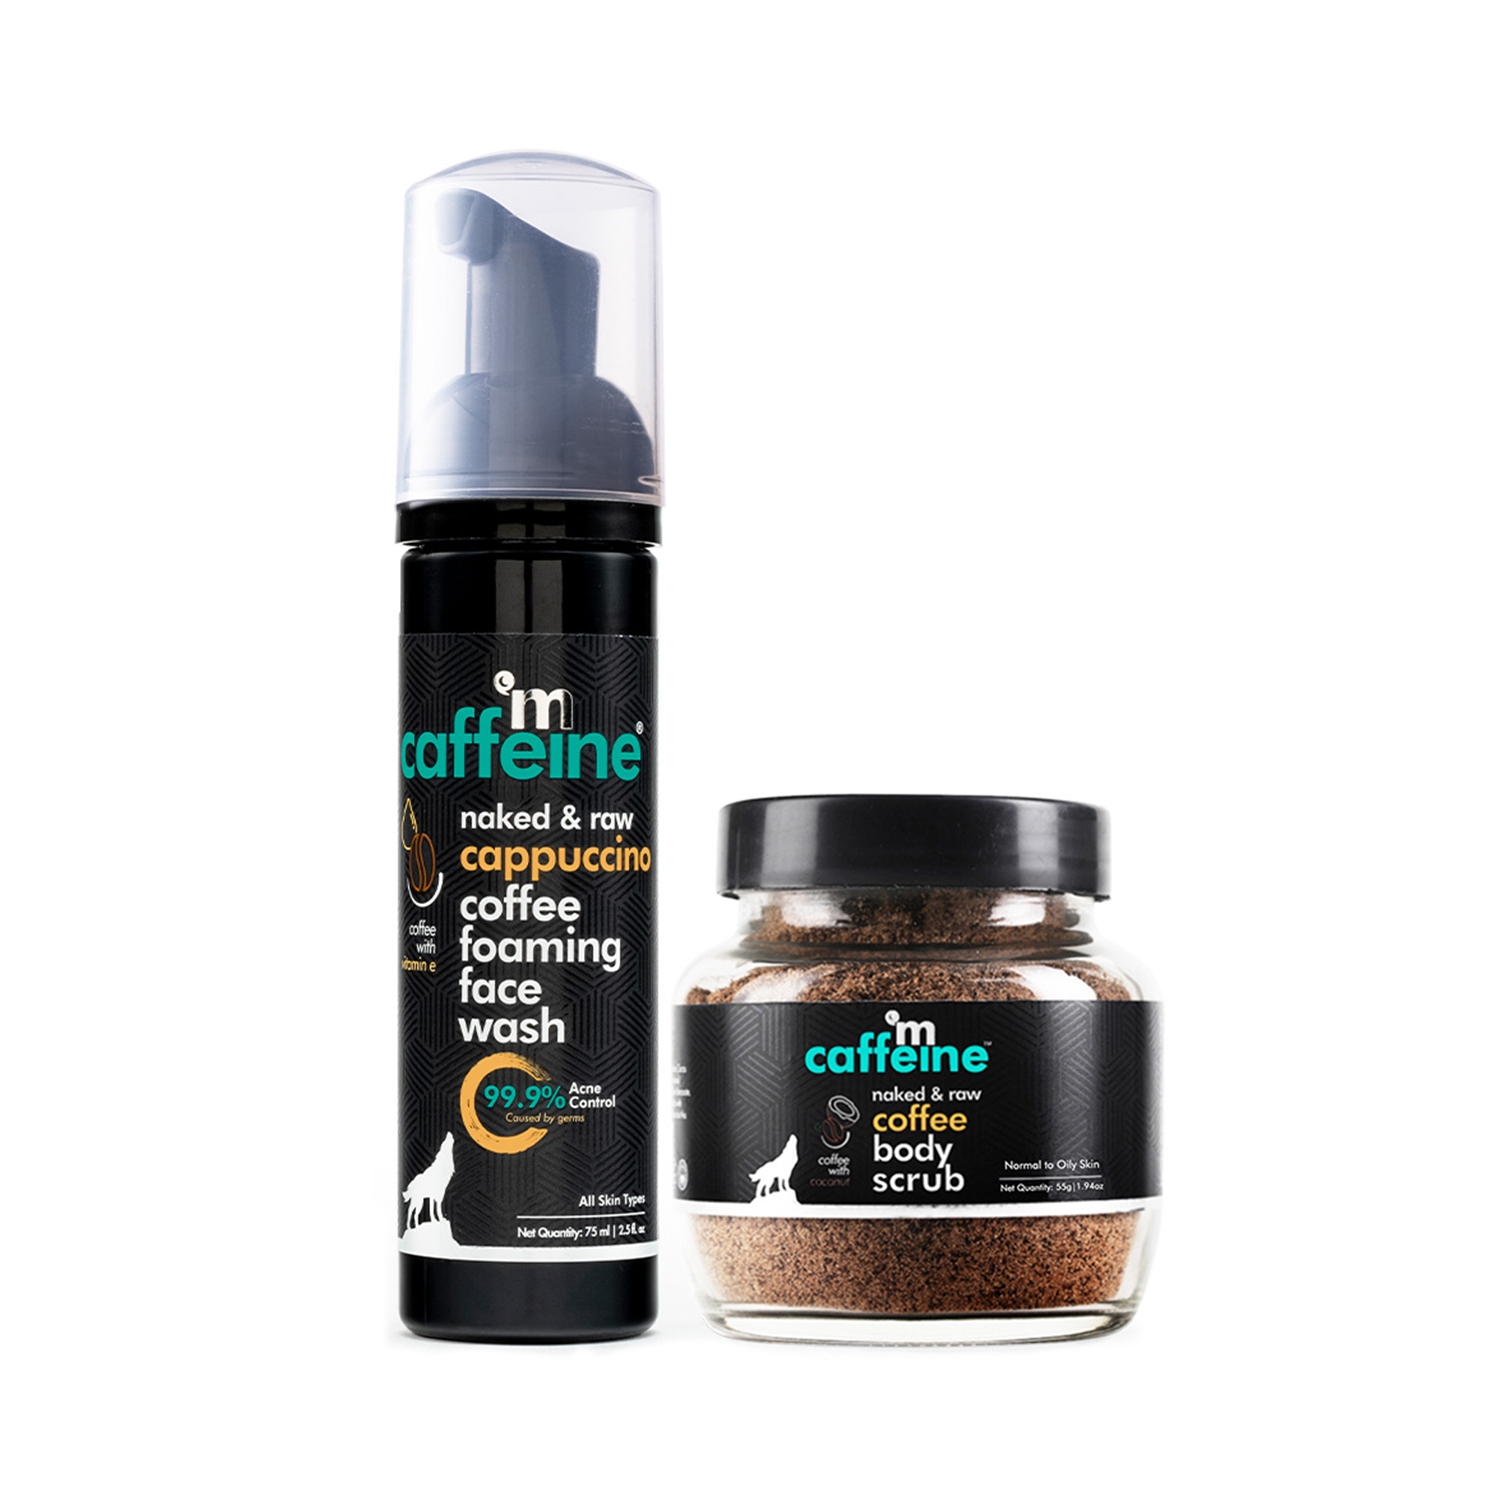 mCaffeine | mCaffeine Nacked & Raw Body Scrub And Cappuccino Coffee Foaming Face Wash - (2Pcs)